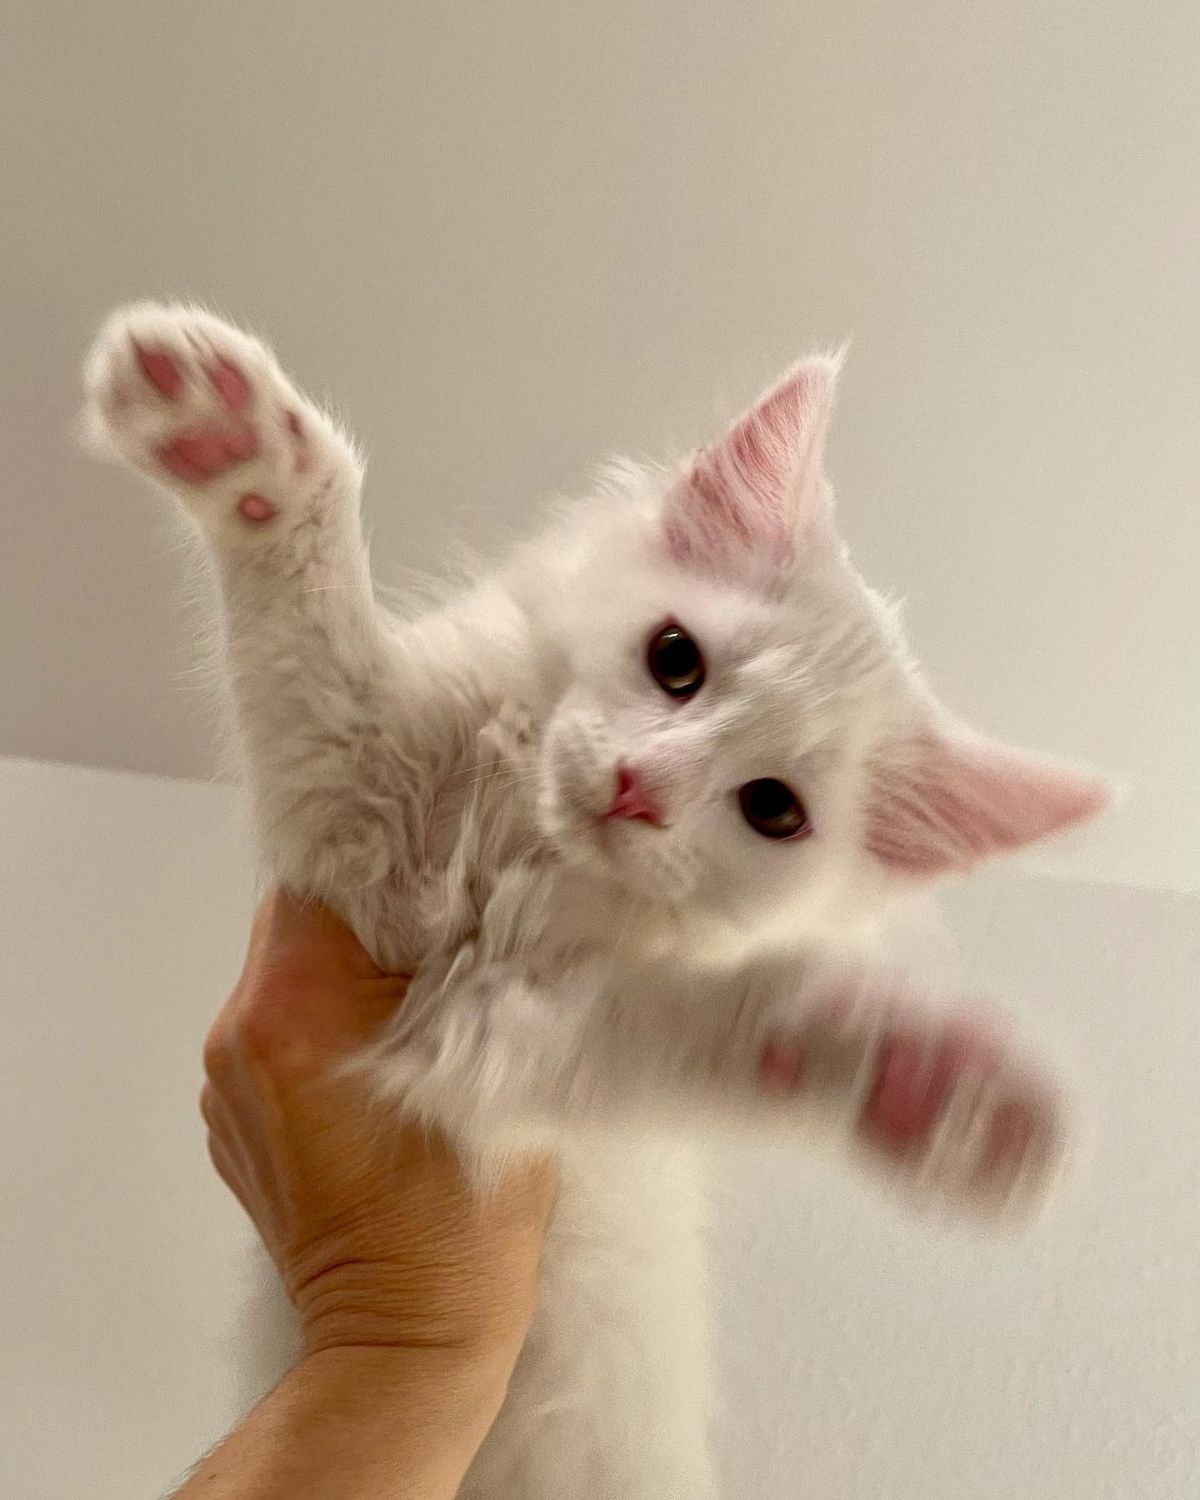 A hand holding a cute white maine coon kitten in teh air.